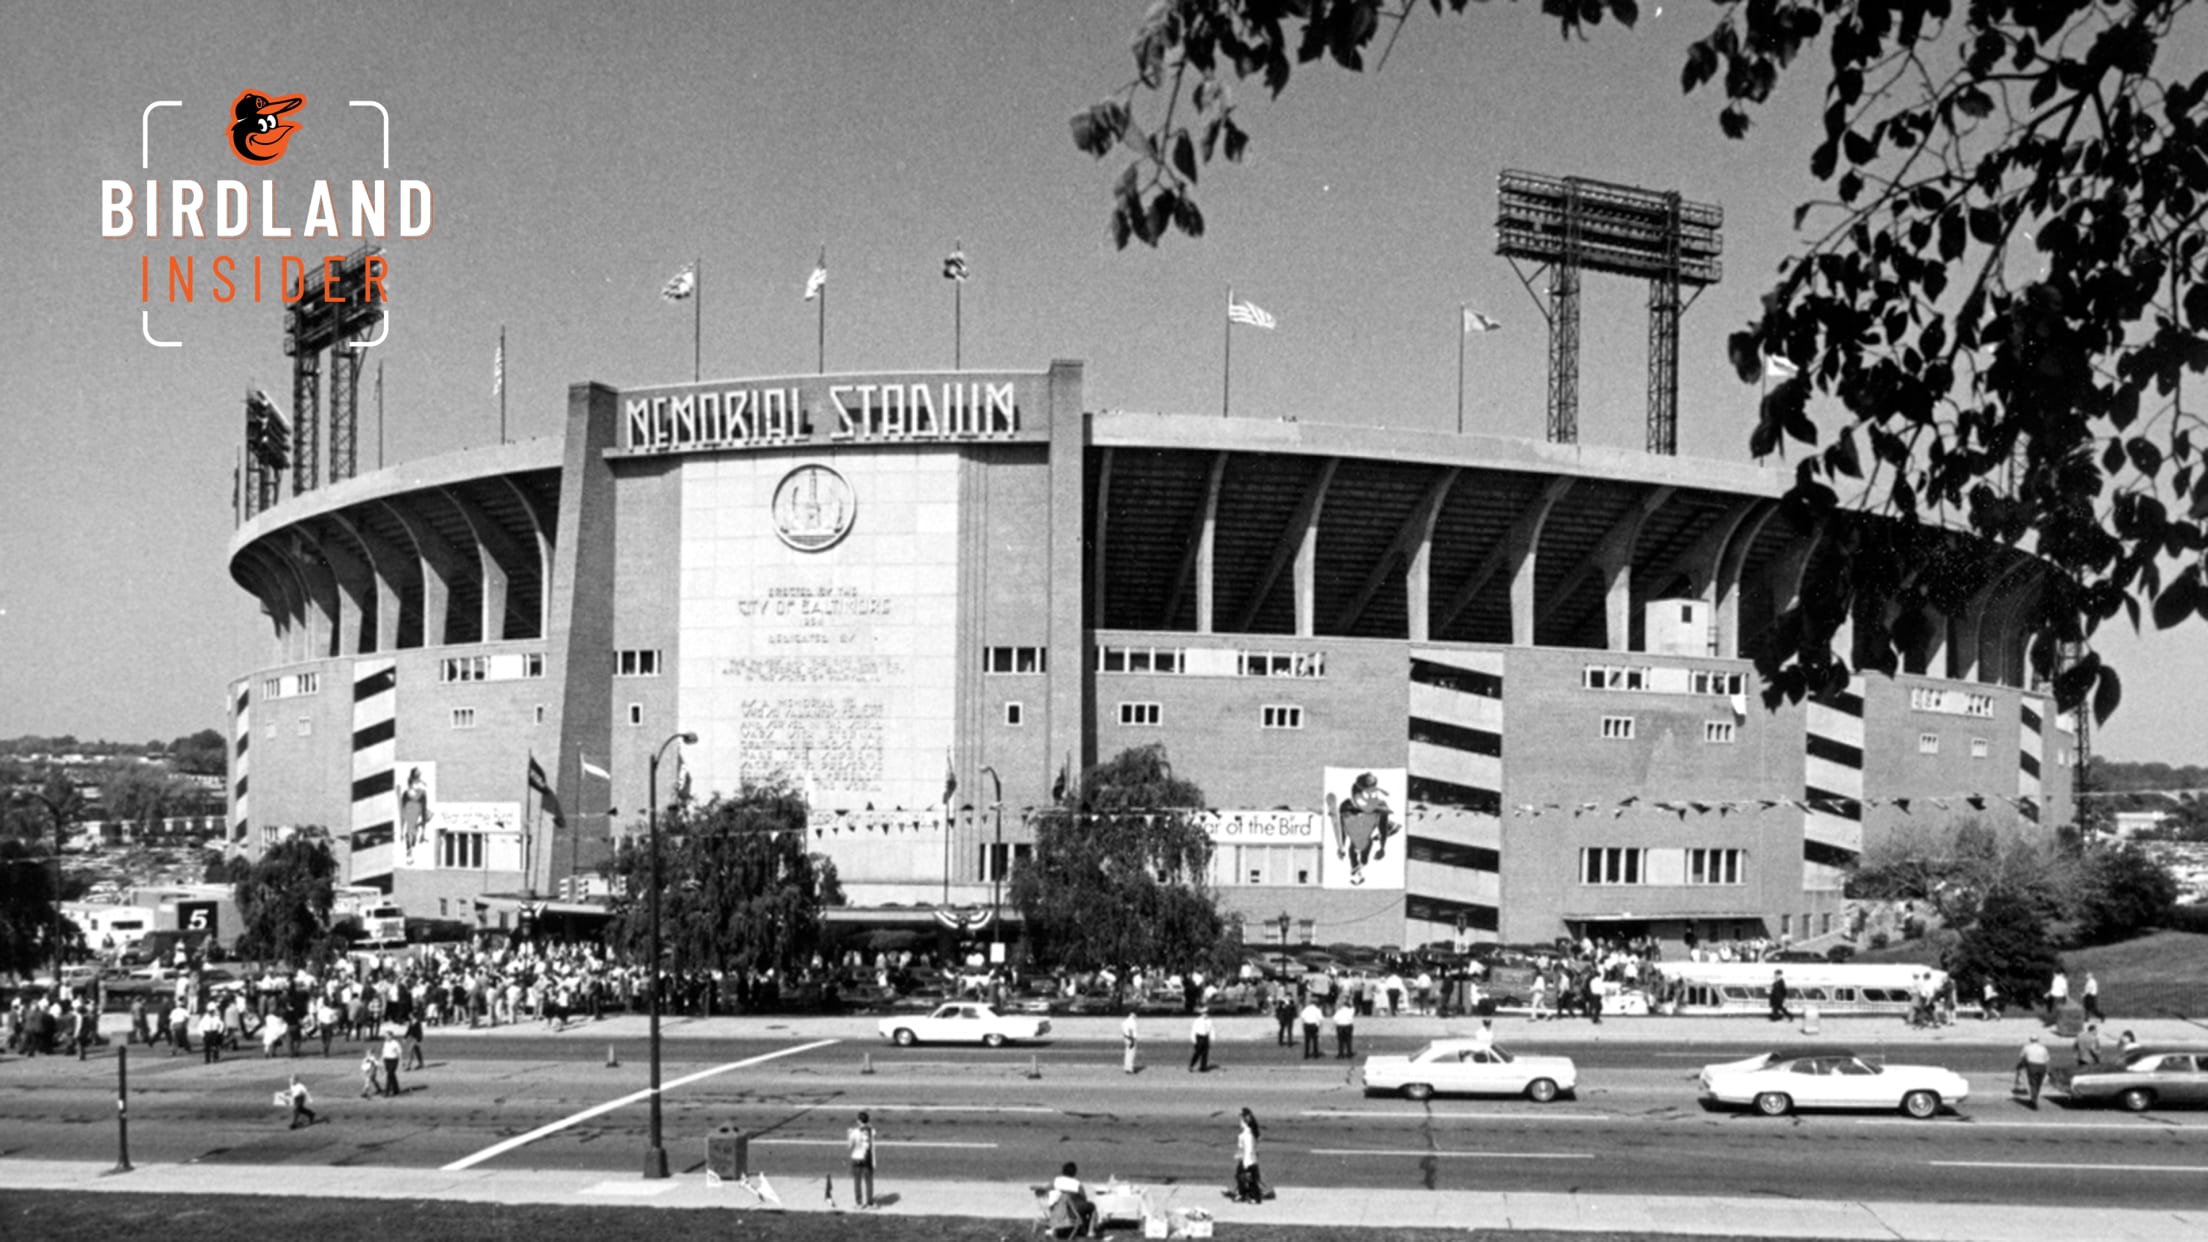 Memorial Stadium - history, photos and more of the Baltimore Orioles former  ballpark